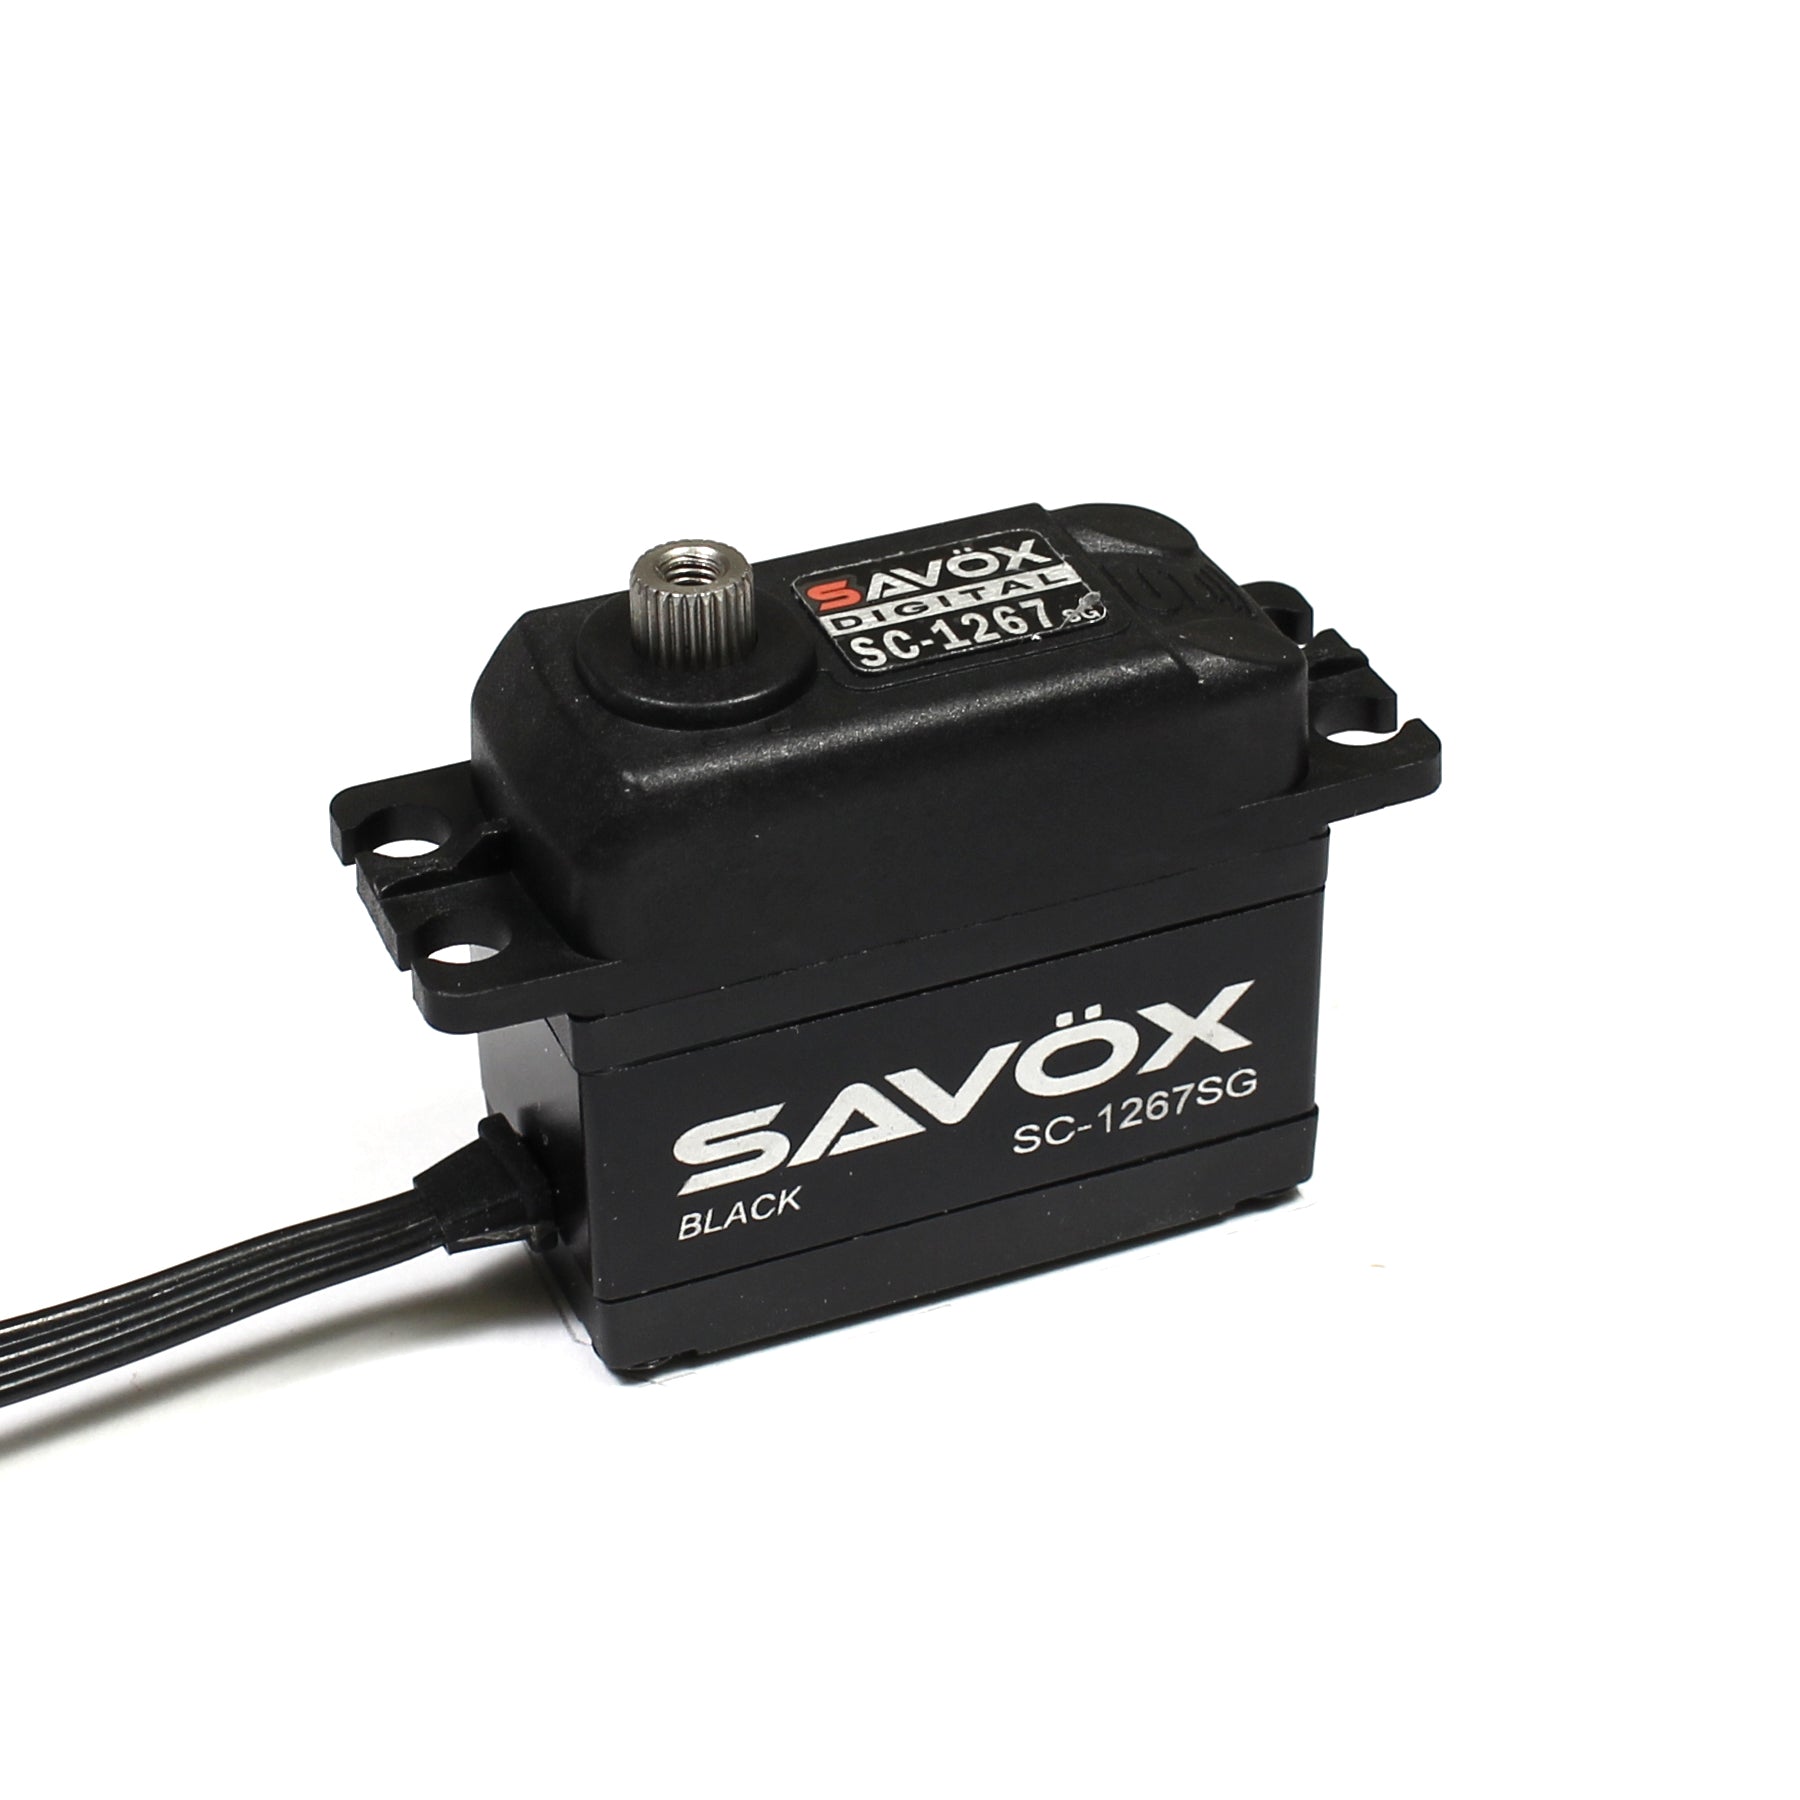 Savox SC-1267SG Black Edition Super Speed ​​Steel Gear Servo (Alto voltaje)